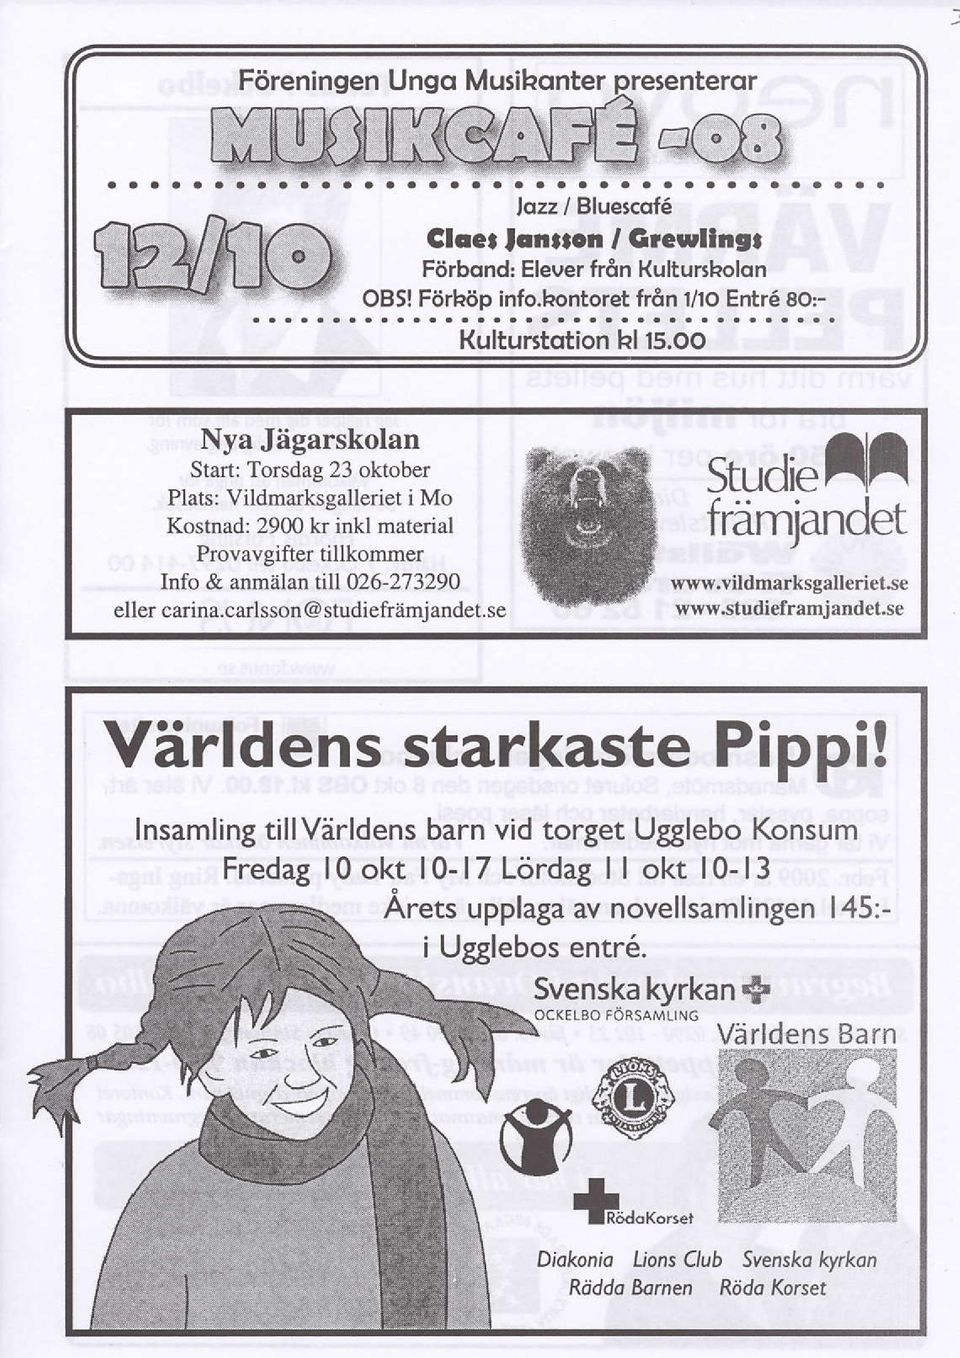 carlsson@ studieframjandet.se studielll frdmjandet www.vildmarksgalleriet.se www.studieframjandet.se V[rldens starkaste Pippi!